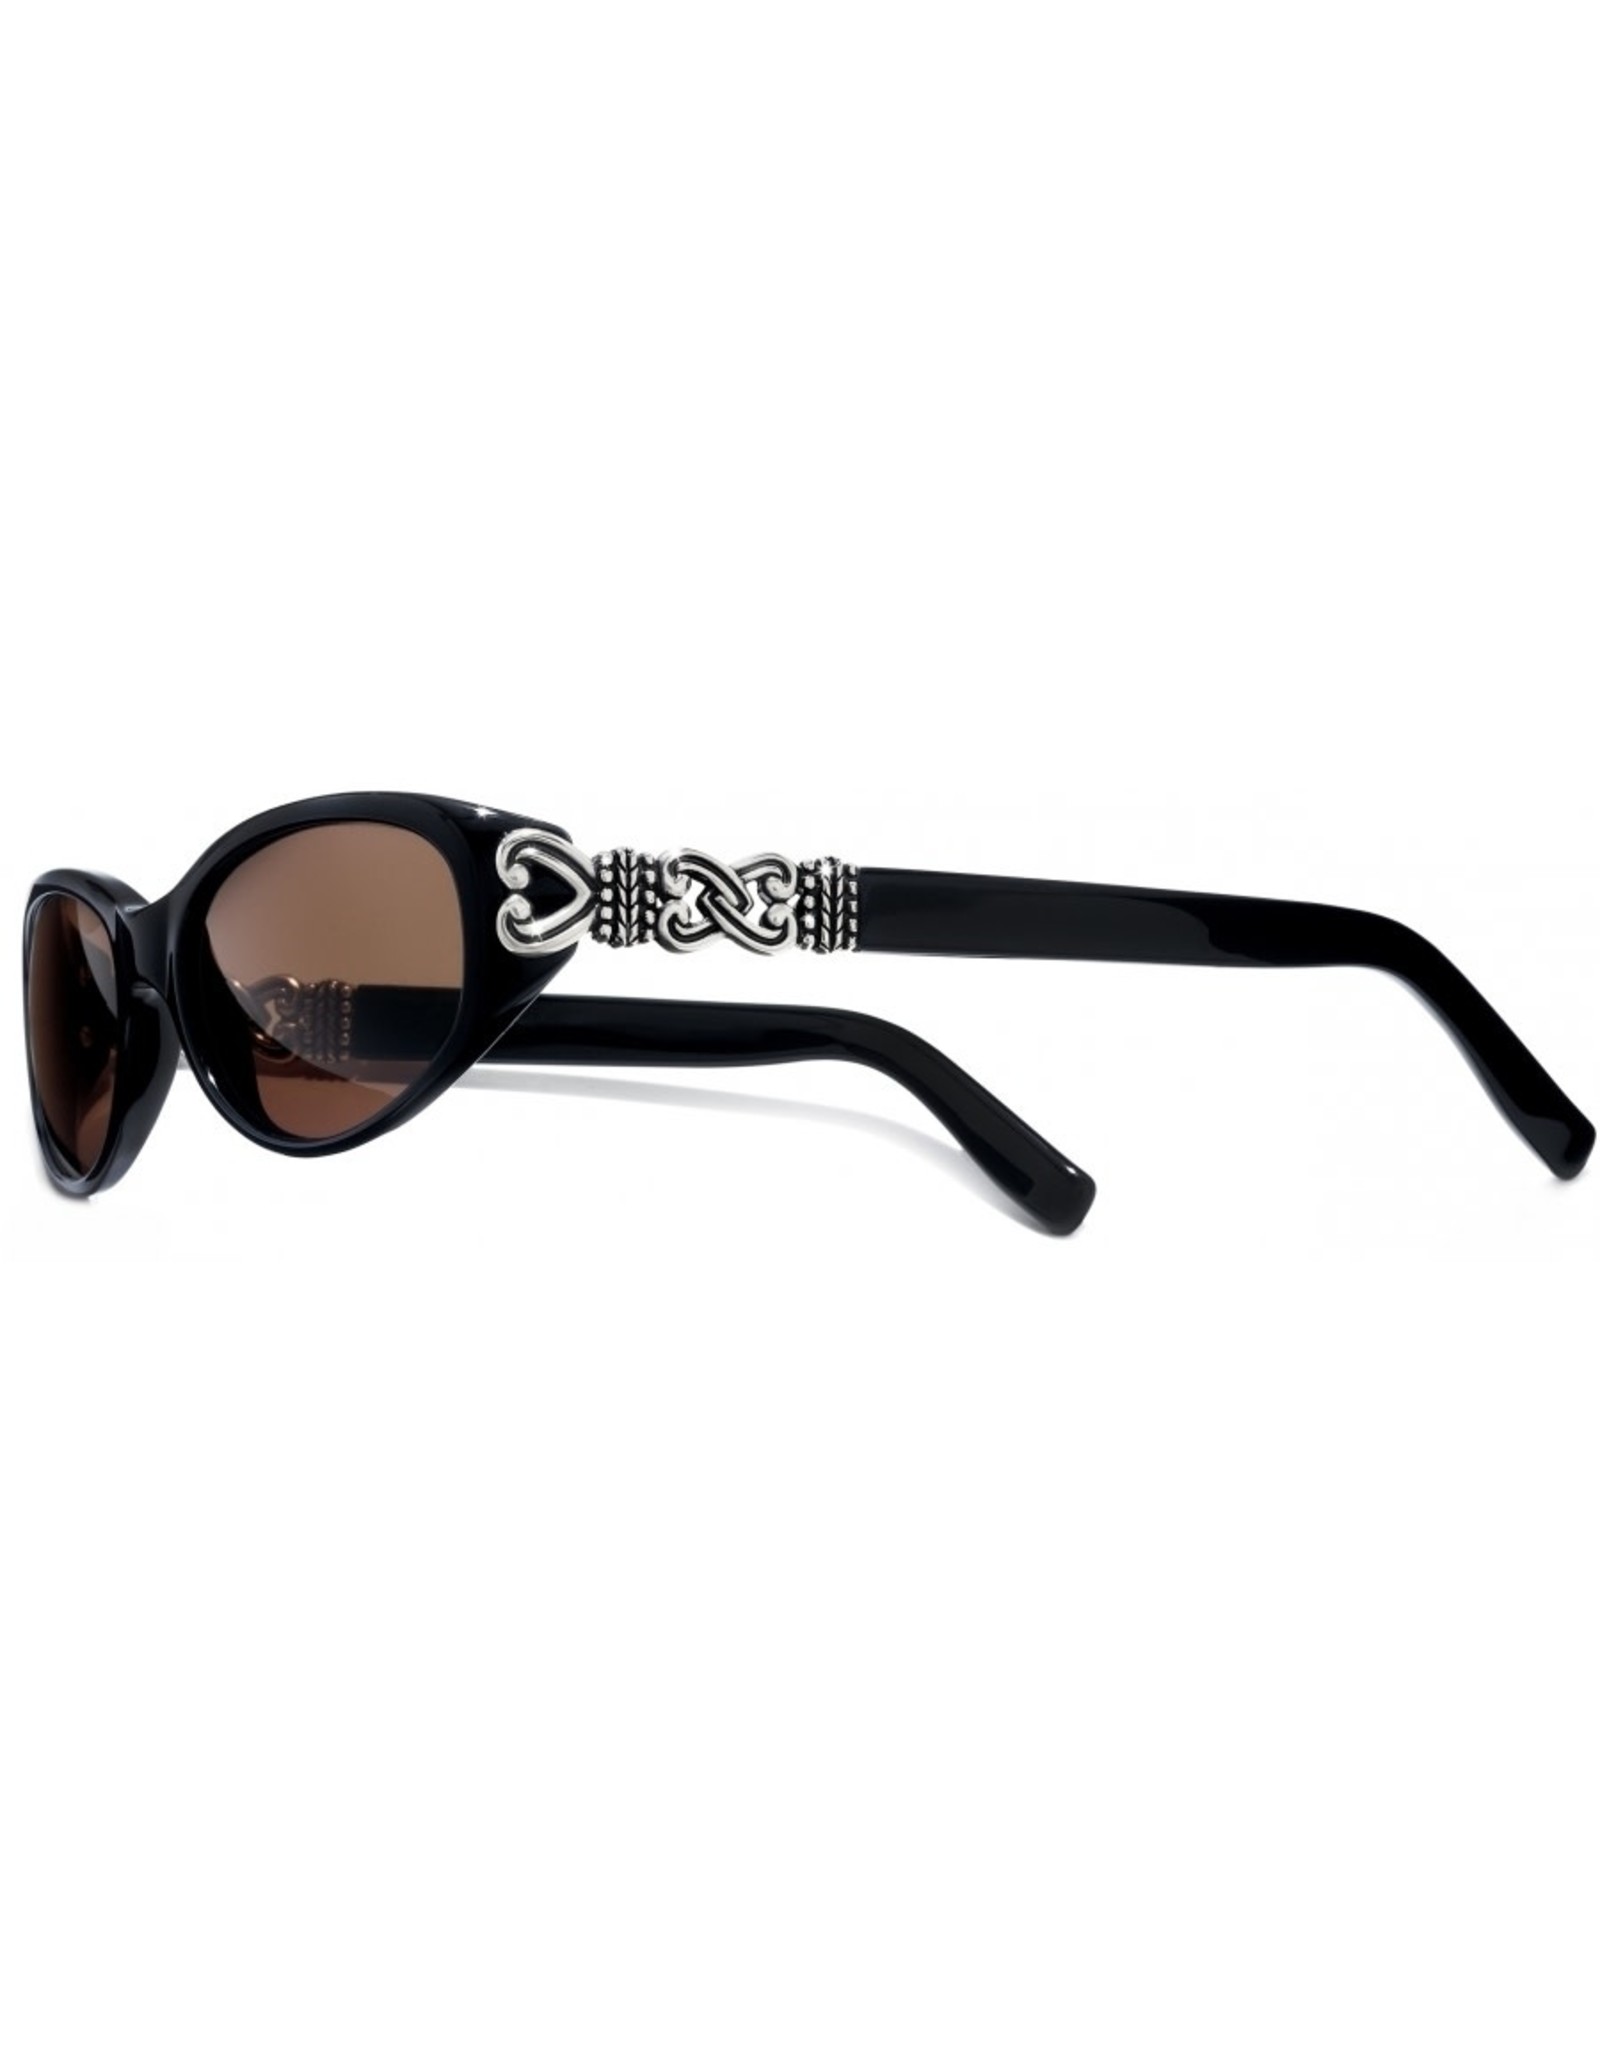 Brighton Brighton SG433 Black Sabrina Sunglasses